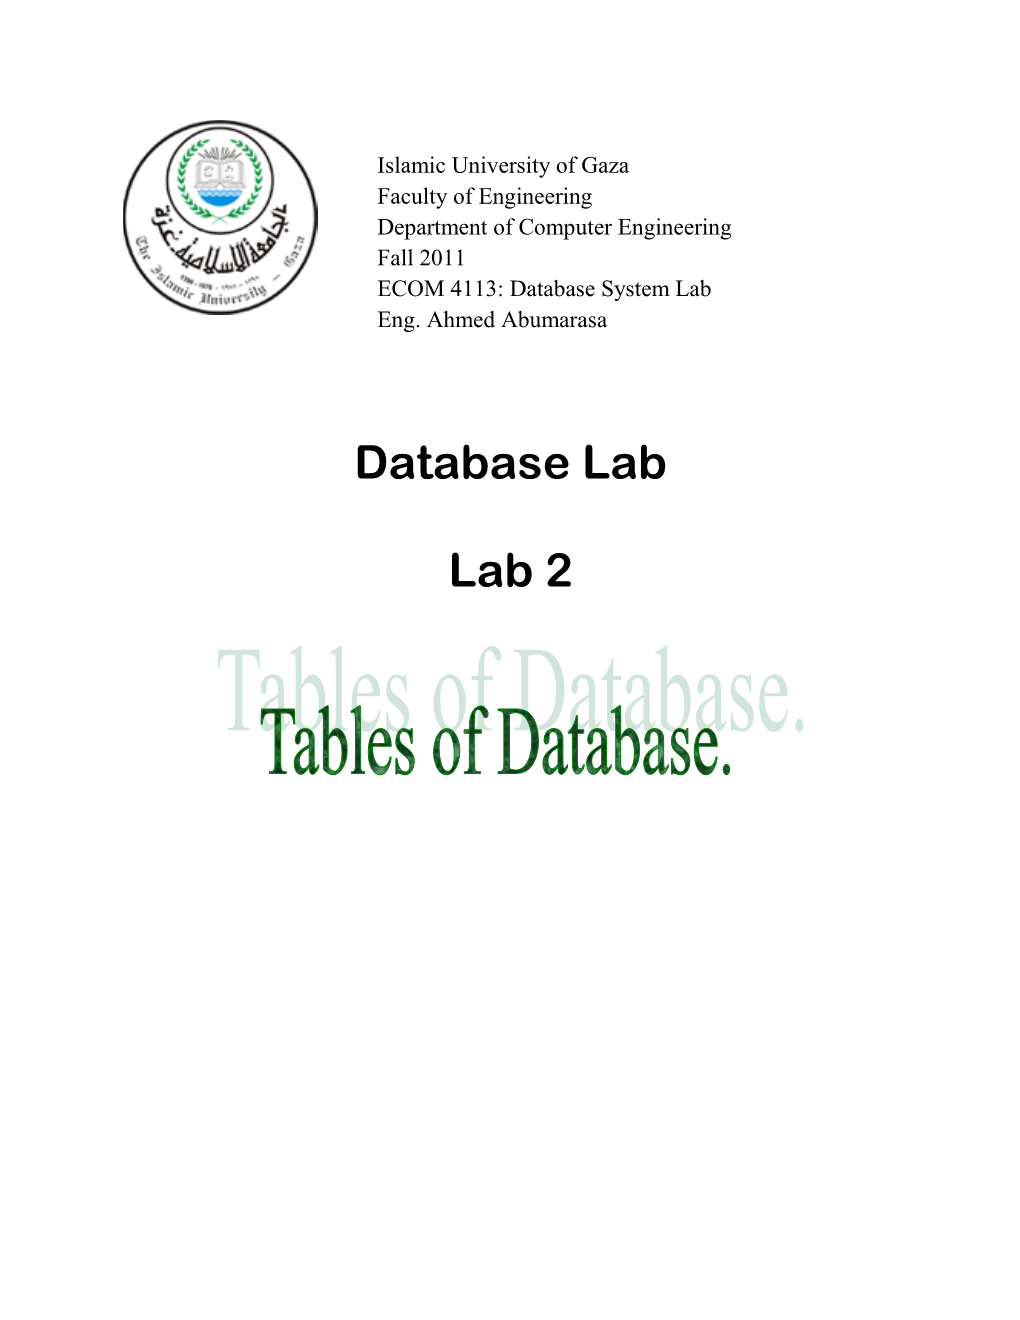 Database Lab Lab 2